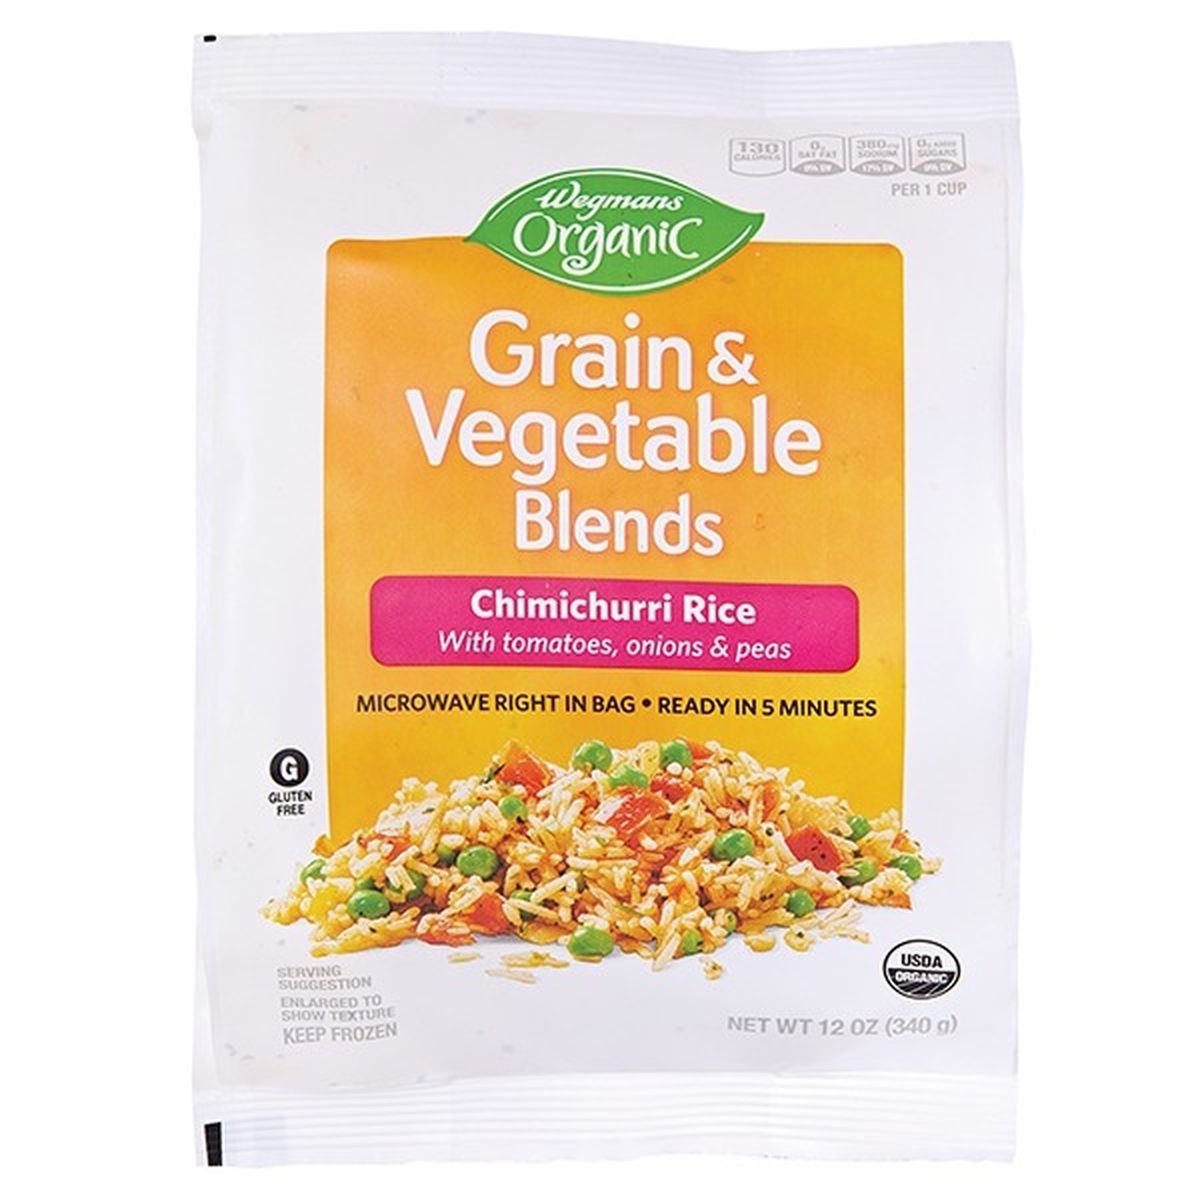 Calories in Wegmans Organic Grain & Vegetable Blends, Chimichurri Rice